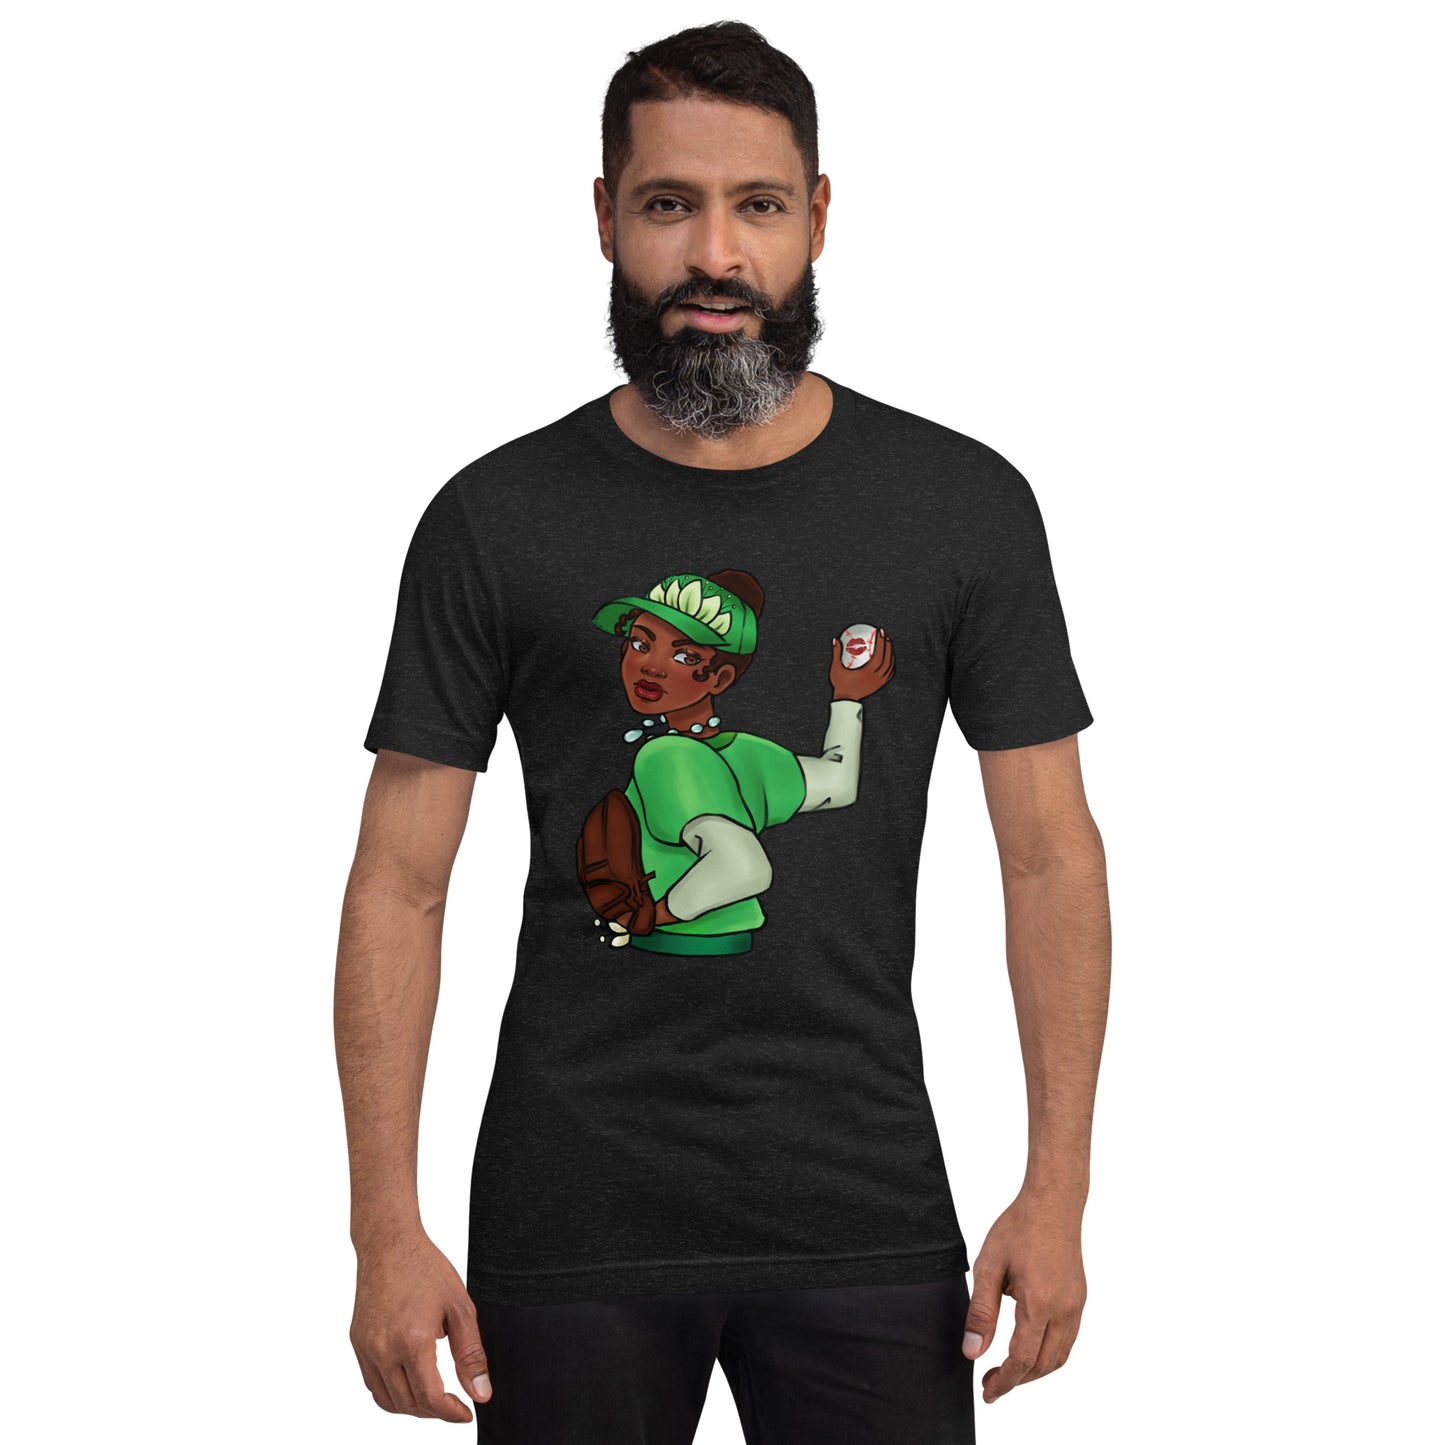 Tiana Inspired - Unisex Adult T-Shirt